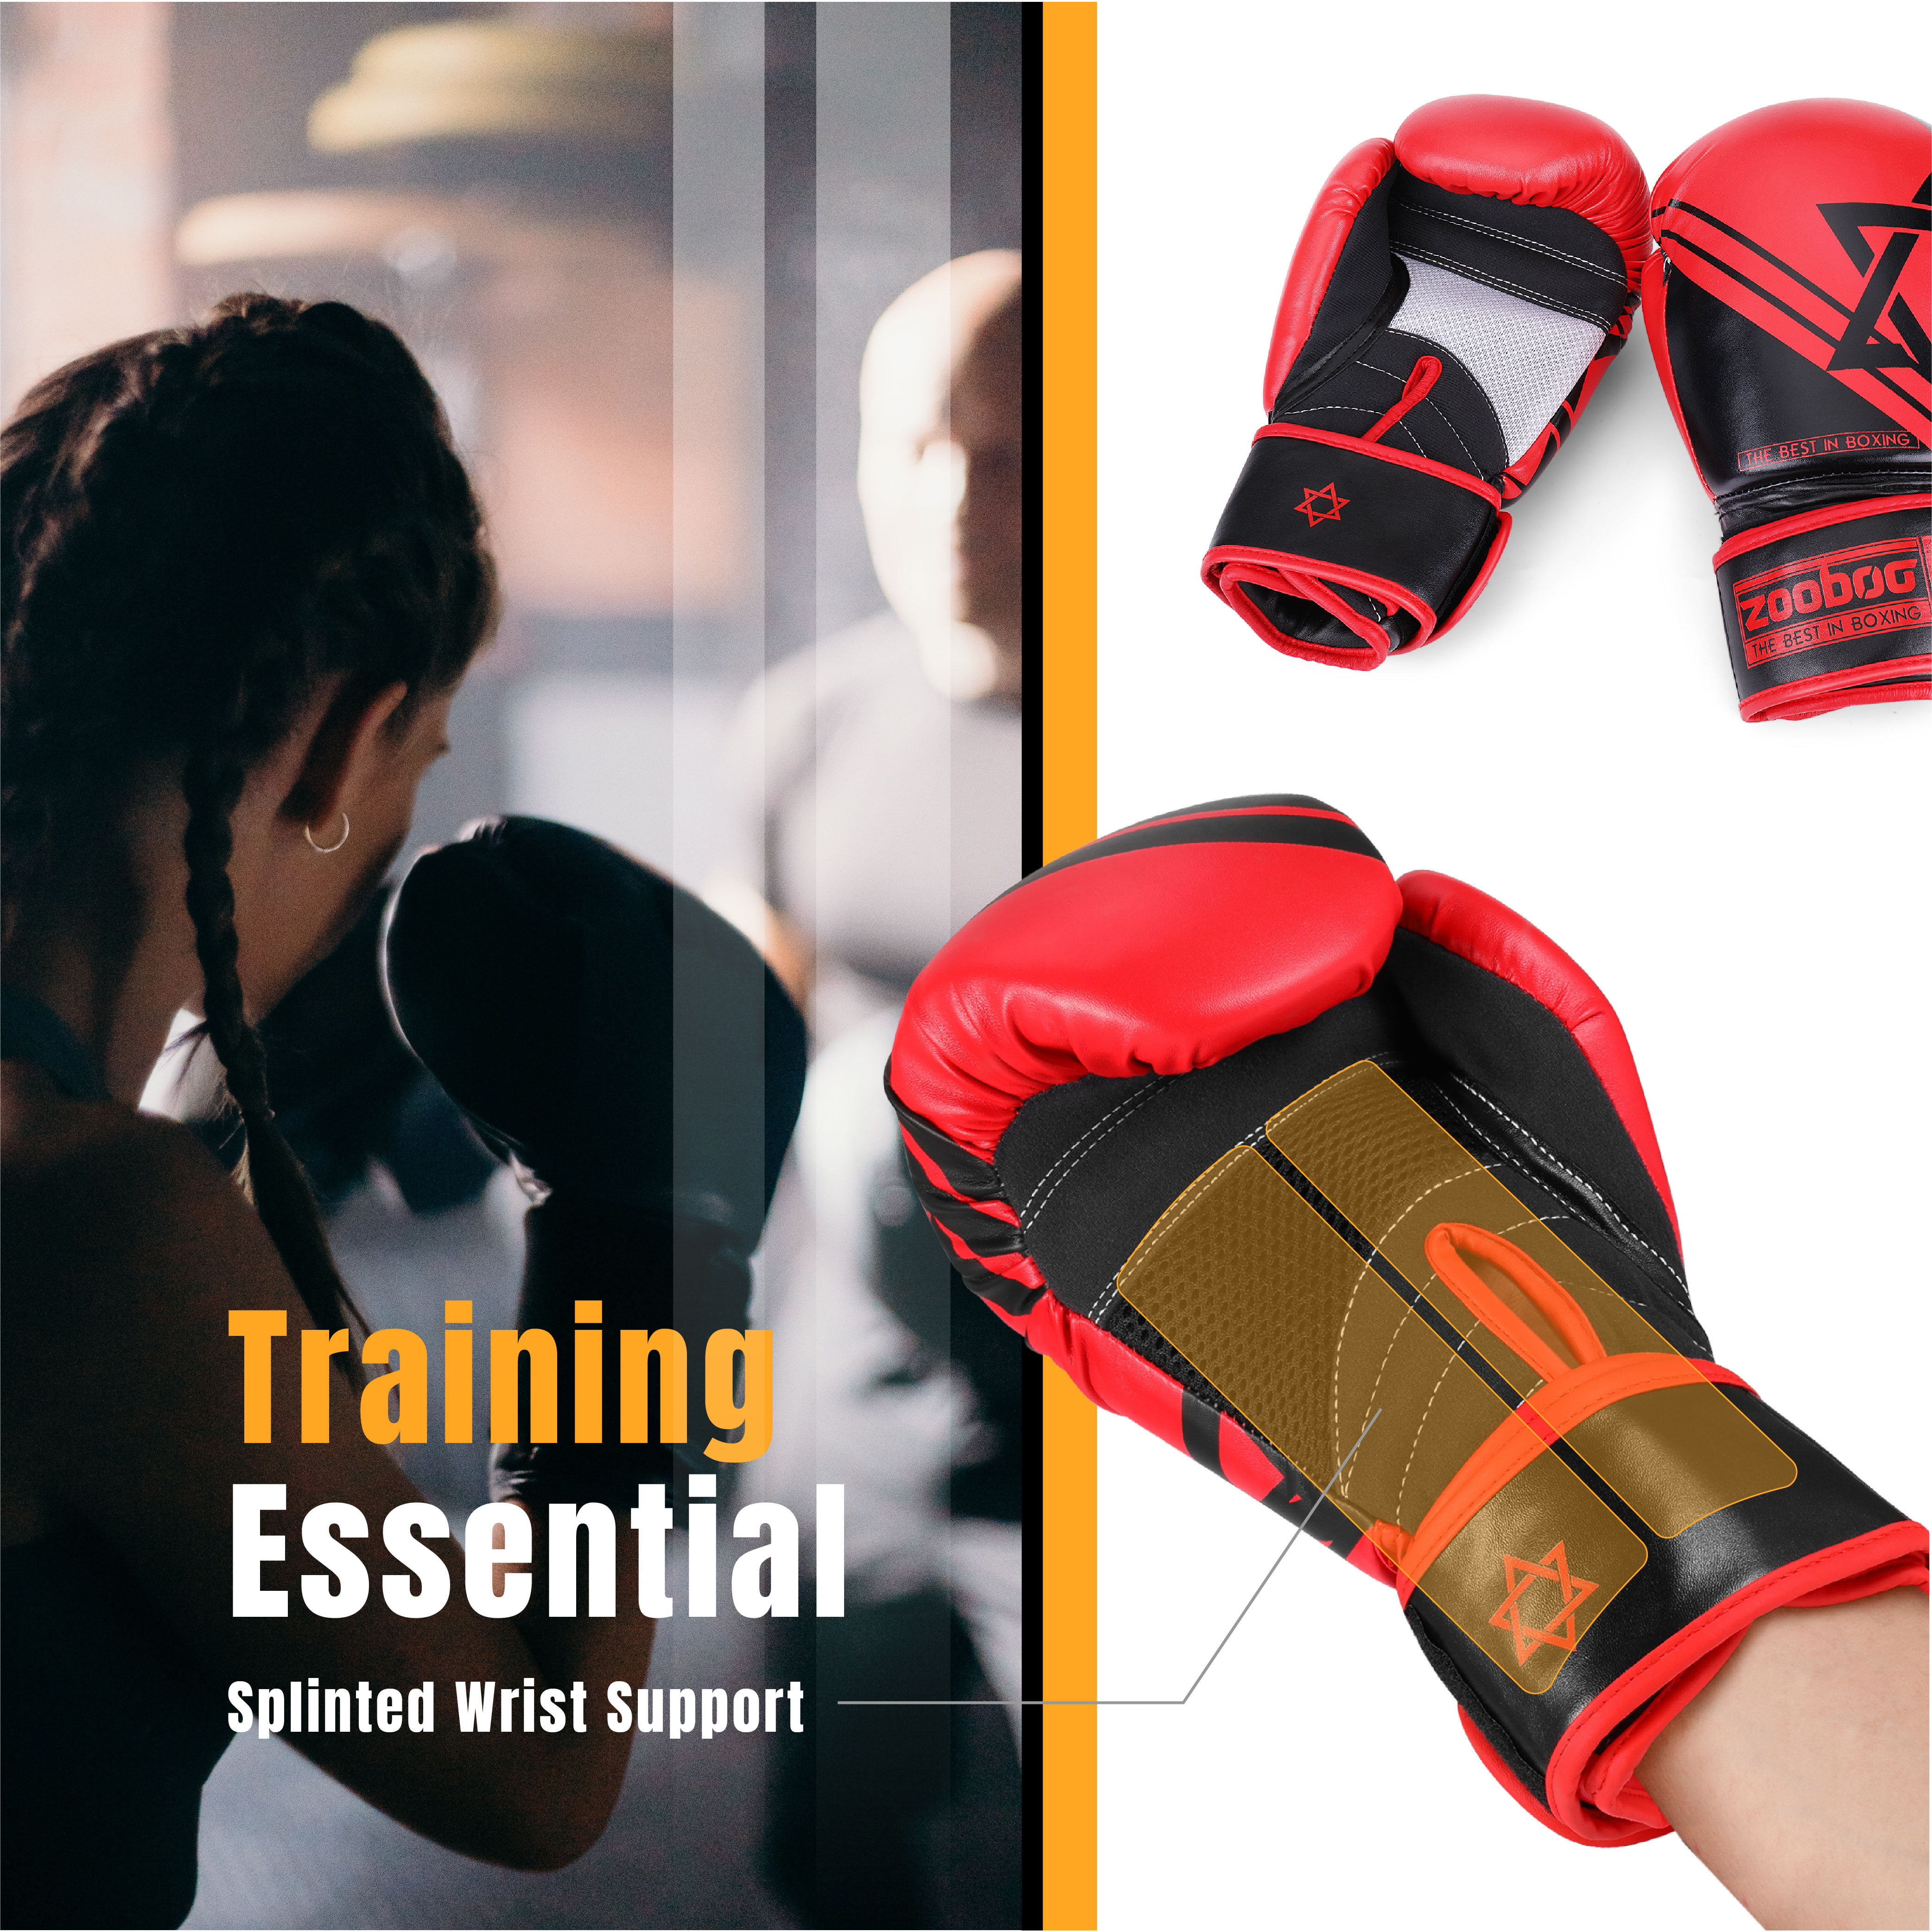 REEBOK Combat Training Boxing Gloves Weight 10 oz Black Gym Padded NEW |  eBay